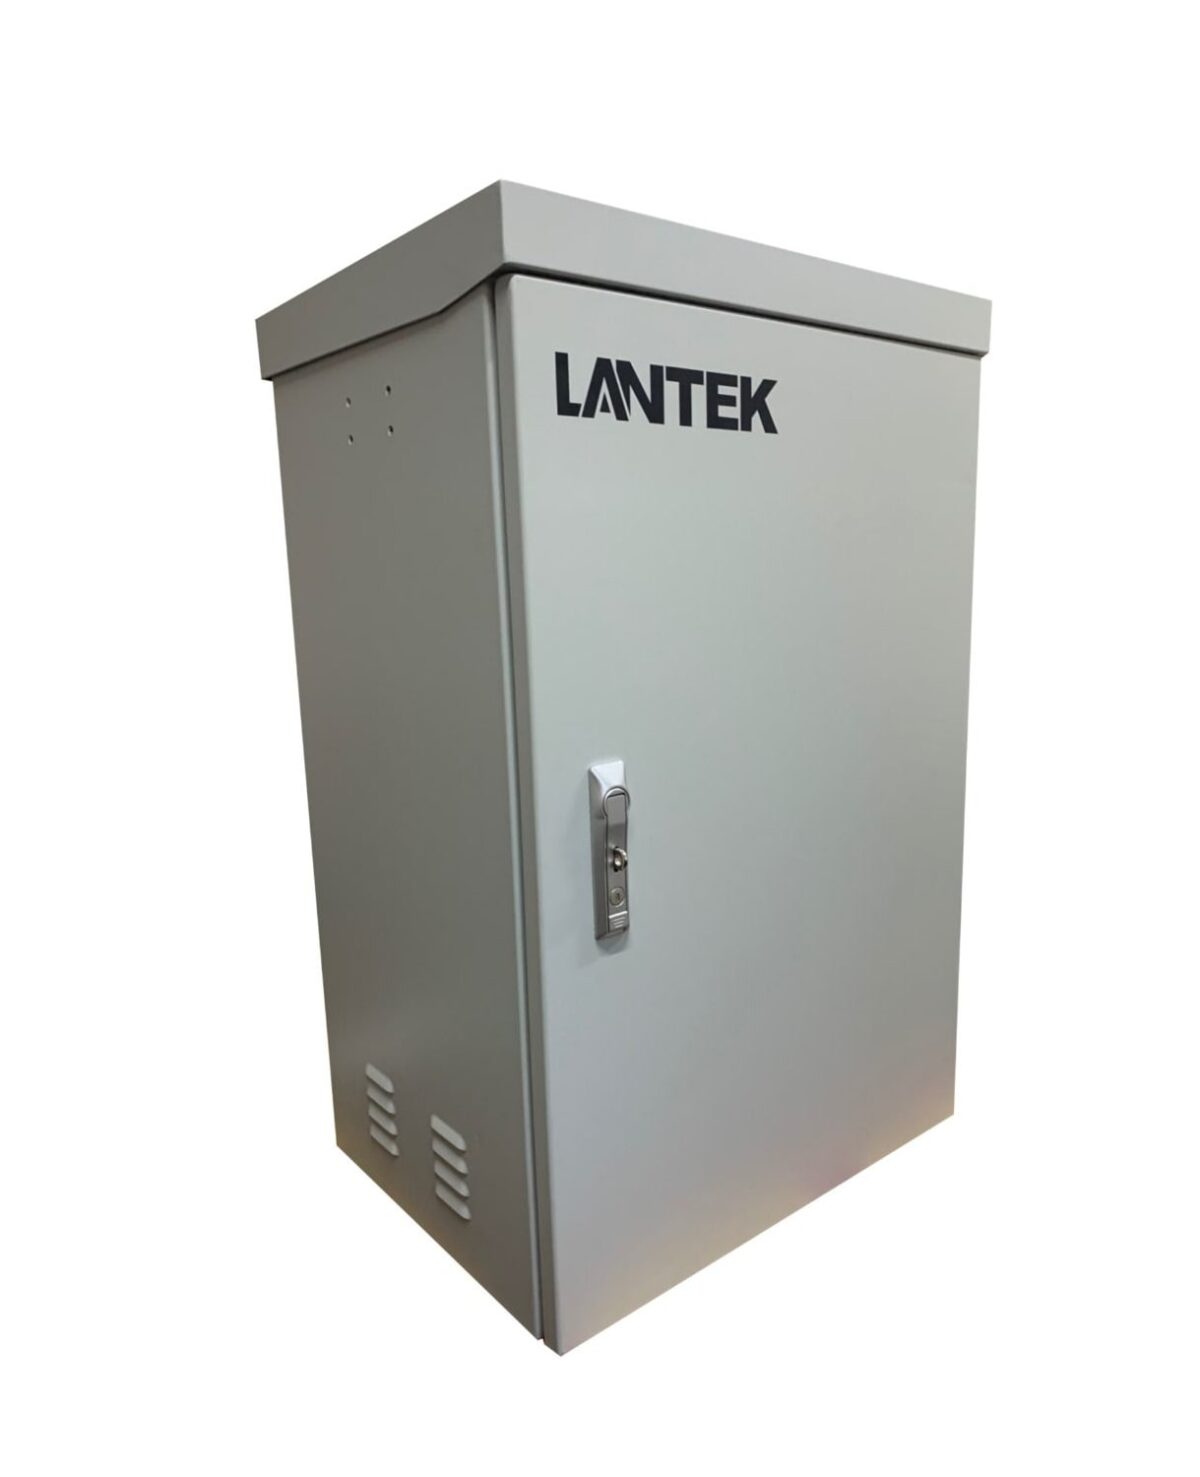 LANTEK-LTK-OUT20U-Gabinete-Exterior-20u-Aluminio-600600-abanico-luz-sensor-temp.-1-Metro-GABINETE-PARA-EXTERIOR1.jpg